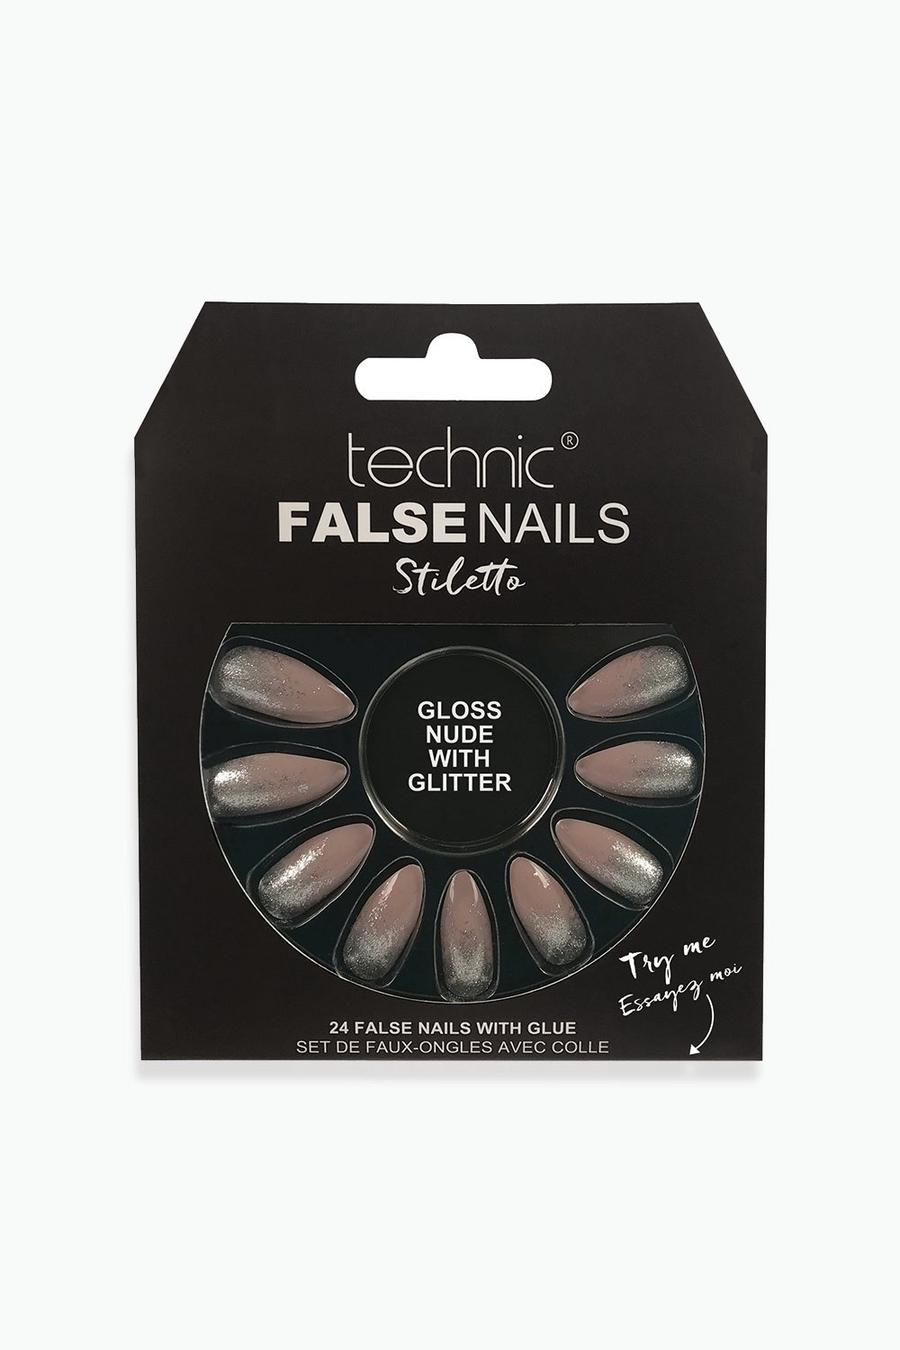 Technic Stiletto Gloss Nude Glitter False Nails 